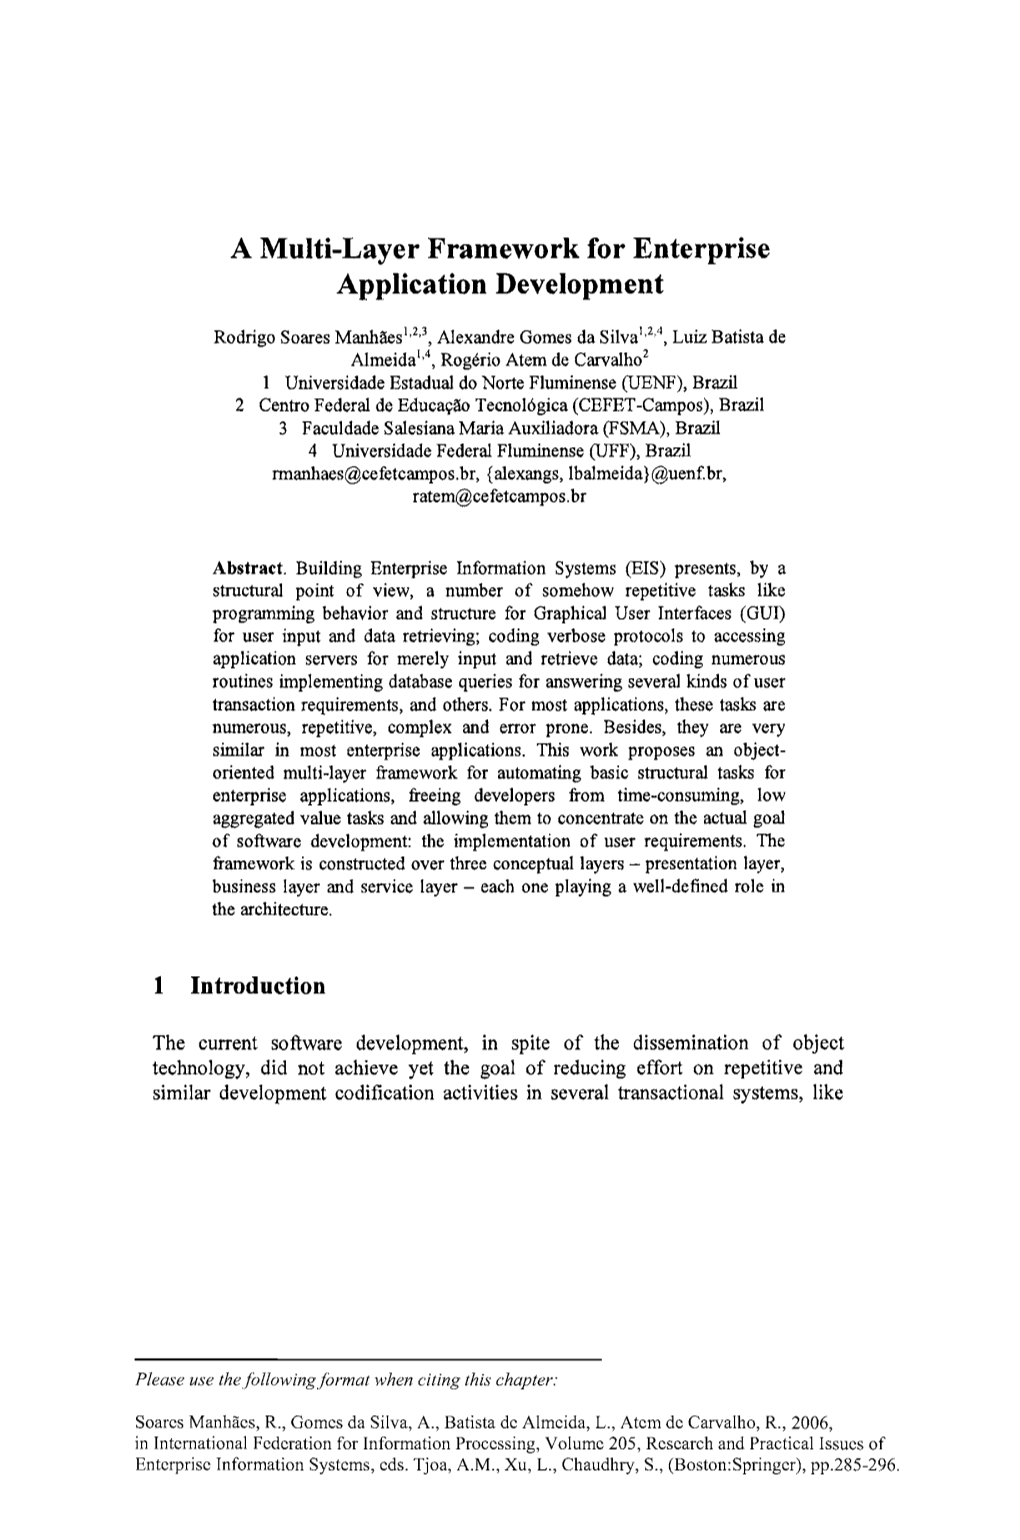 A Multi-Layer Framework for Enterprise Application Development